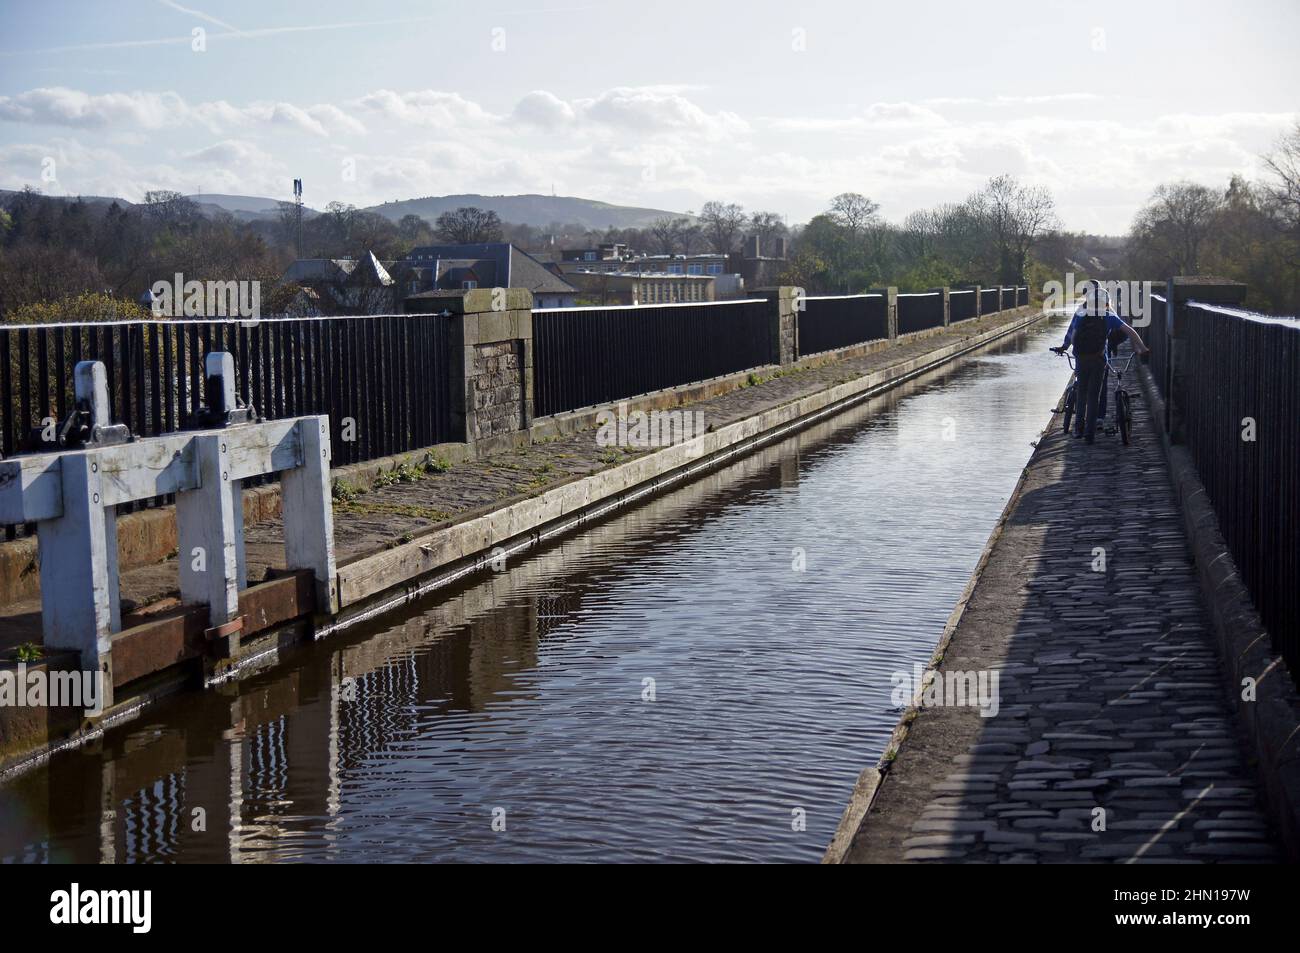 Scotland: Slateford Aqueduct on the Union Canal Stock Photo